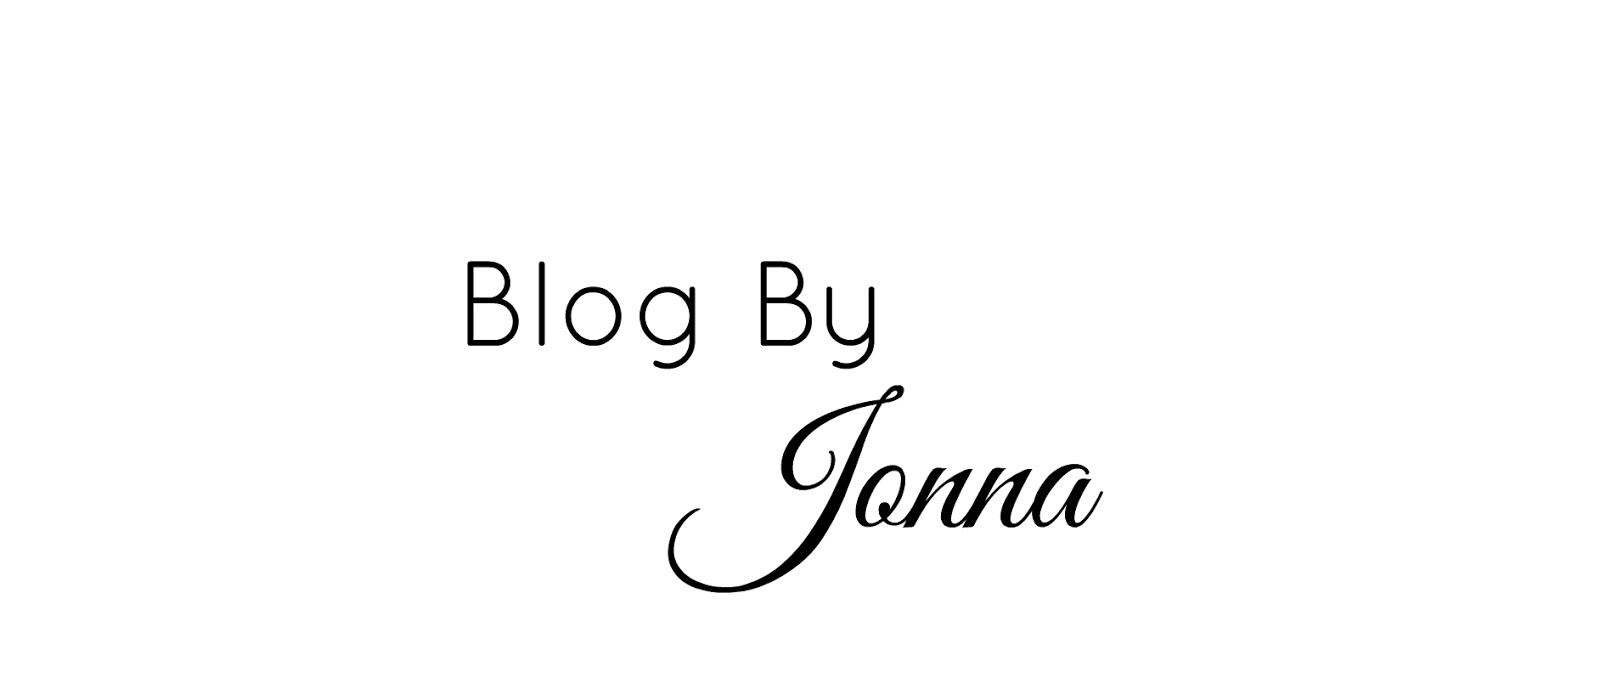 Blog By Jonna